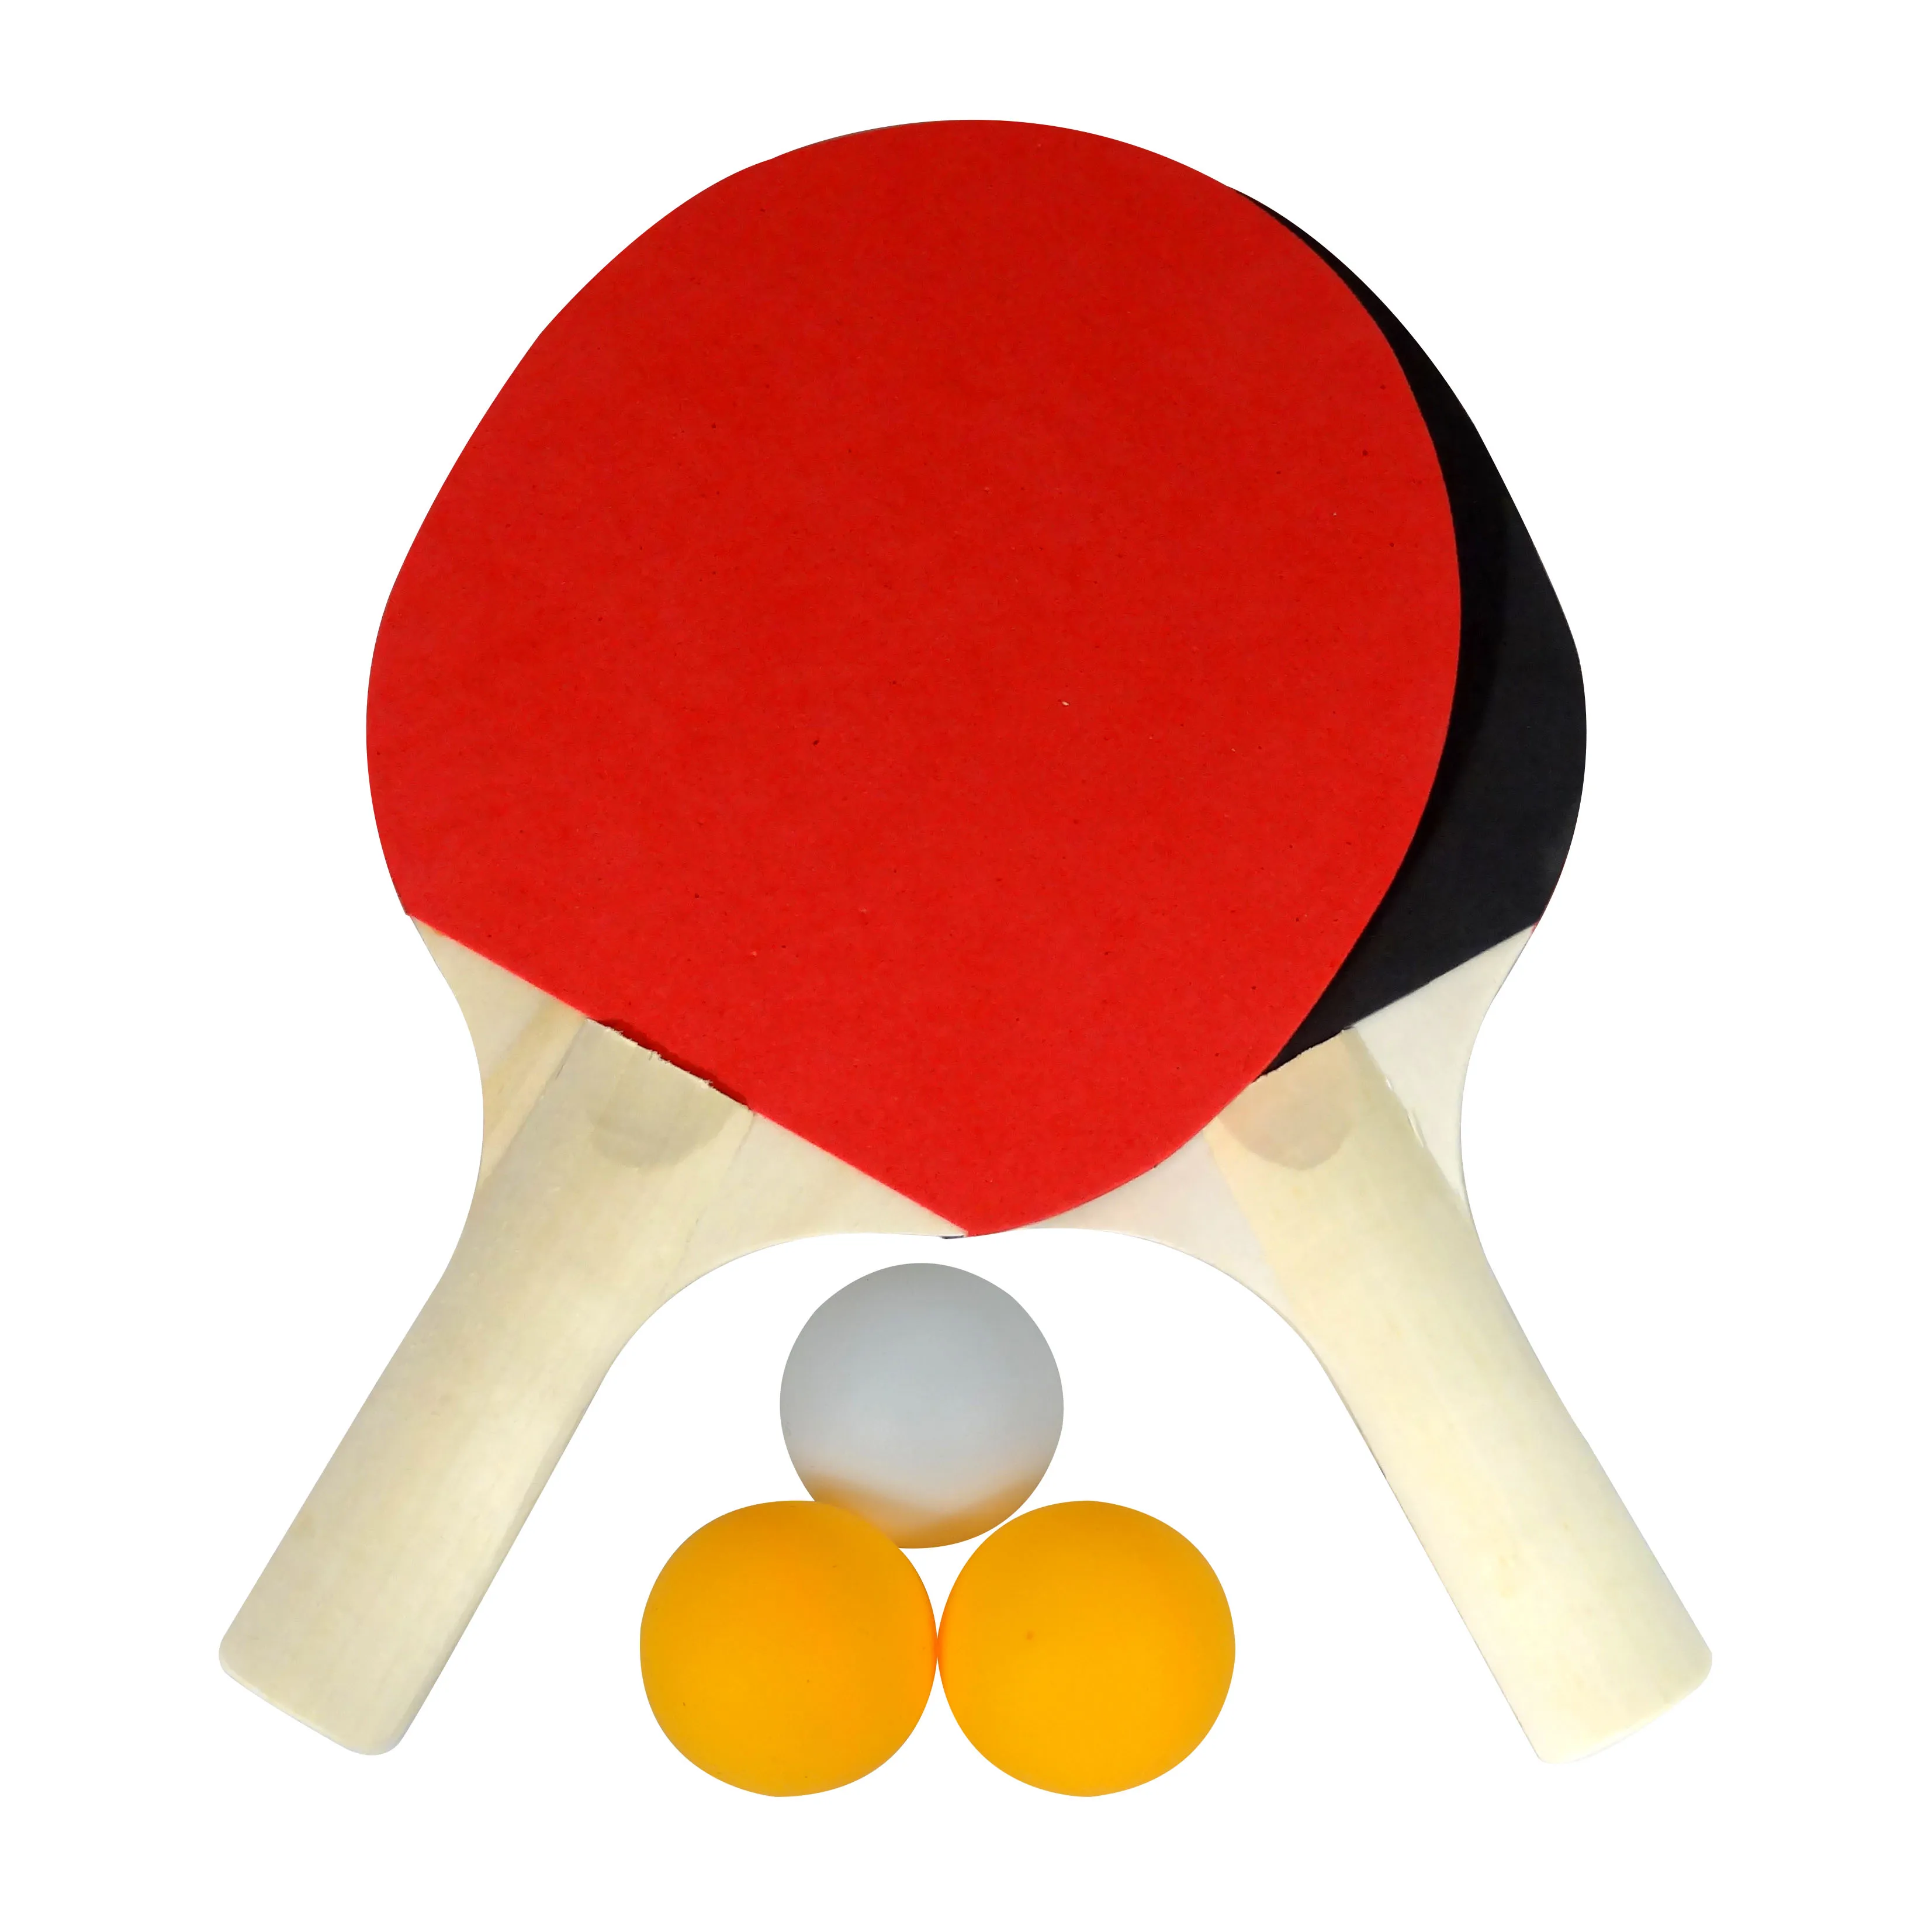 Ракетки для тенниса набор. Ракетка настольный теннис пинг. Набор ракетки для пинг понга. Теннисная ракетка пинпонг. Table Tennis Racket набор.